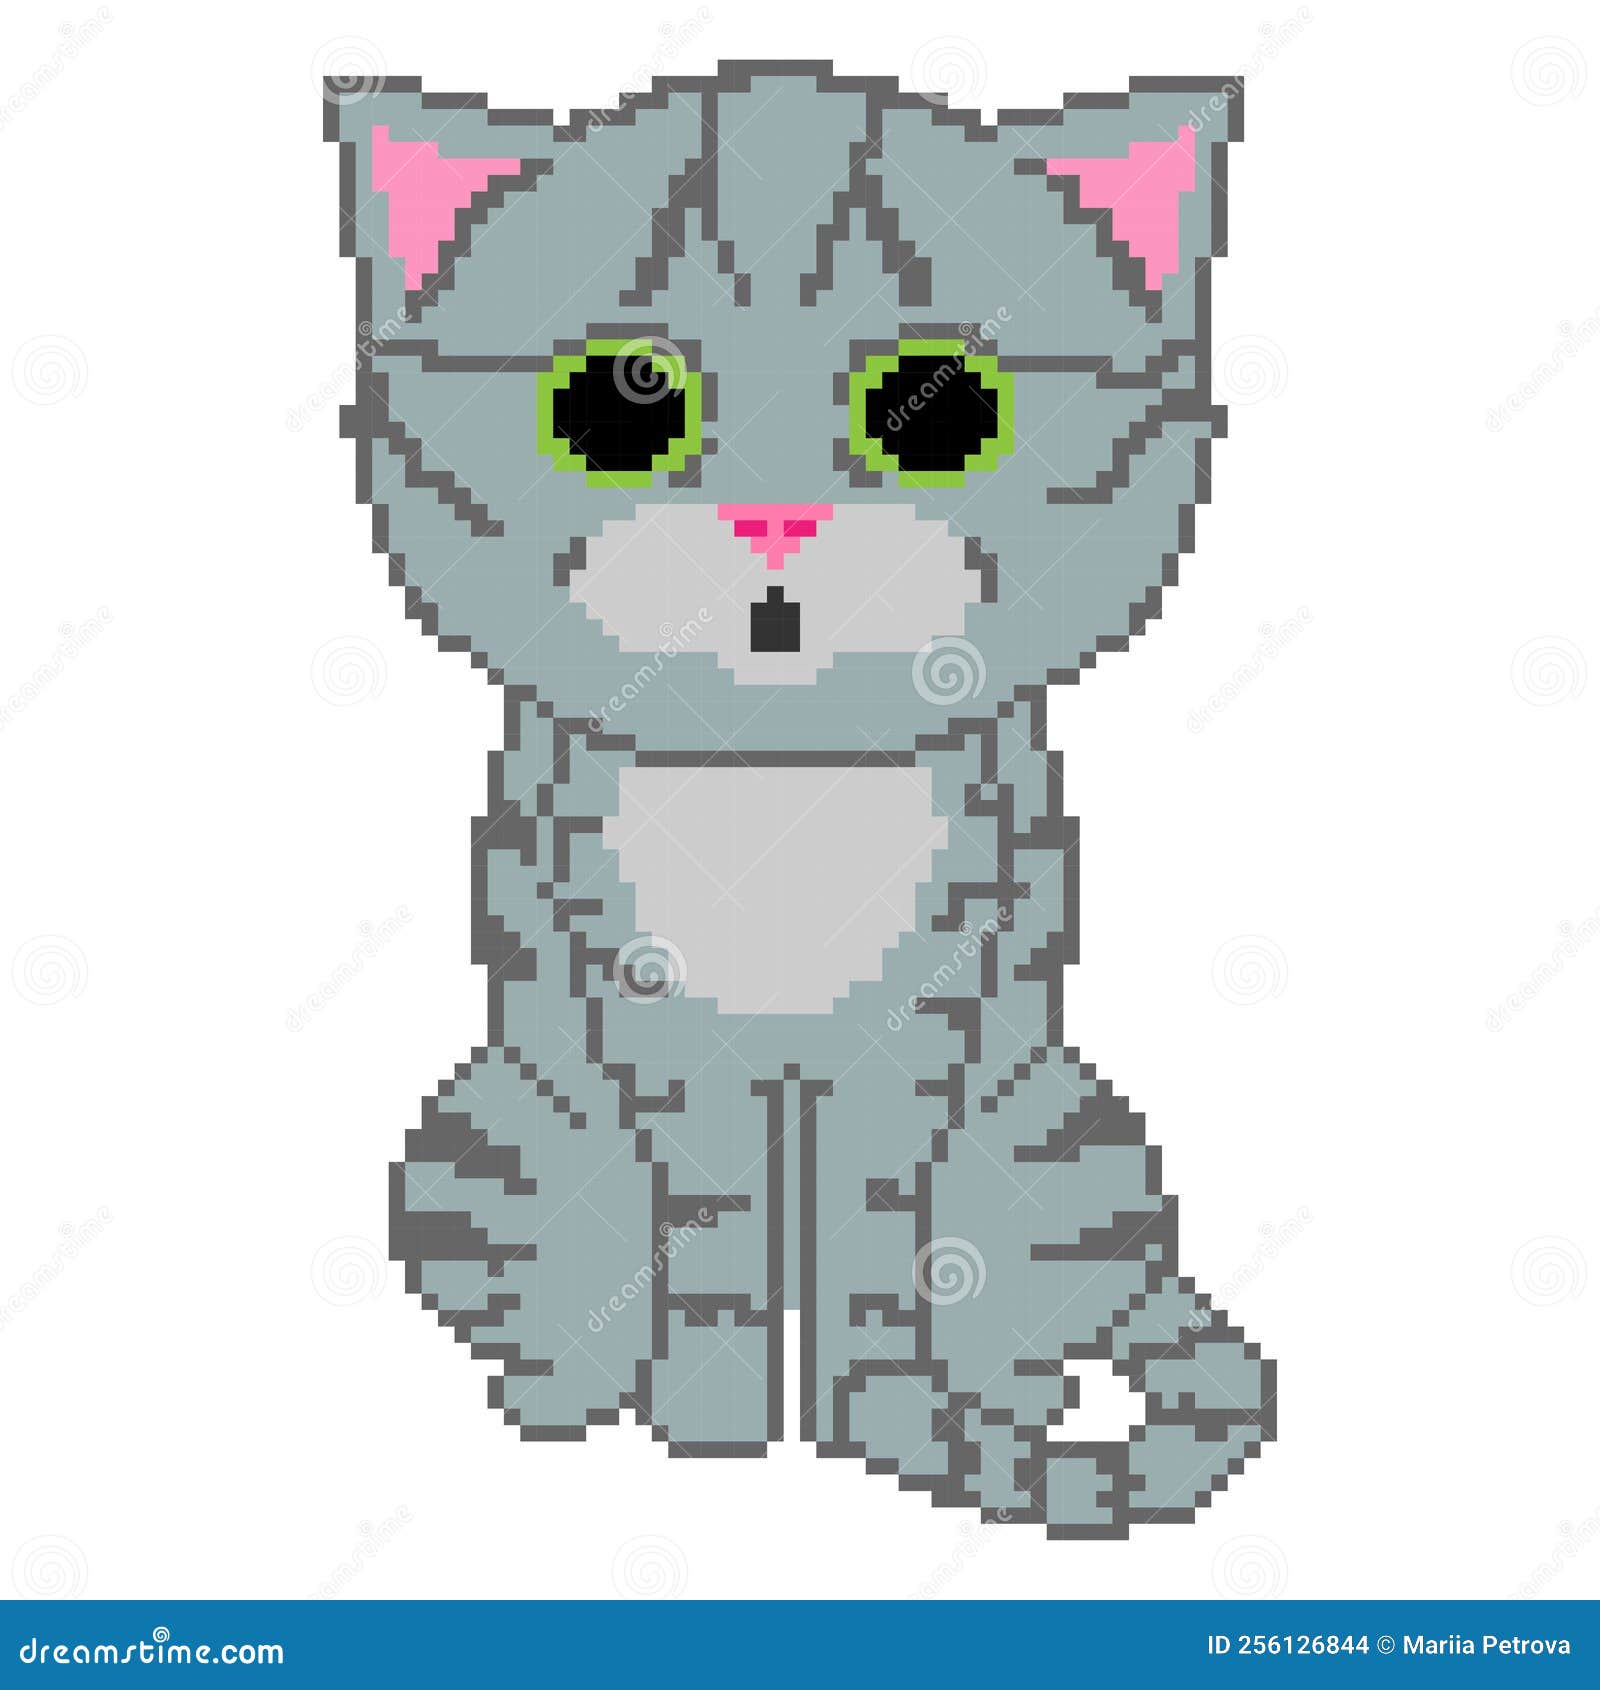 Gato animal ilustração de pixel art